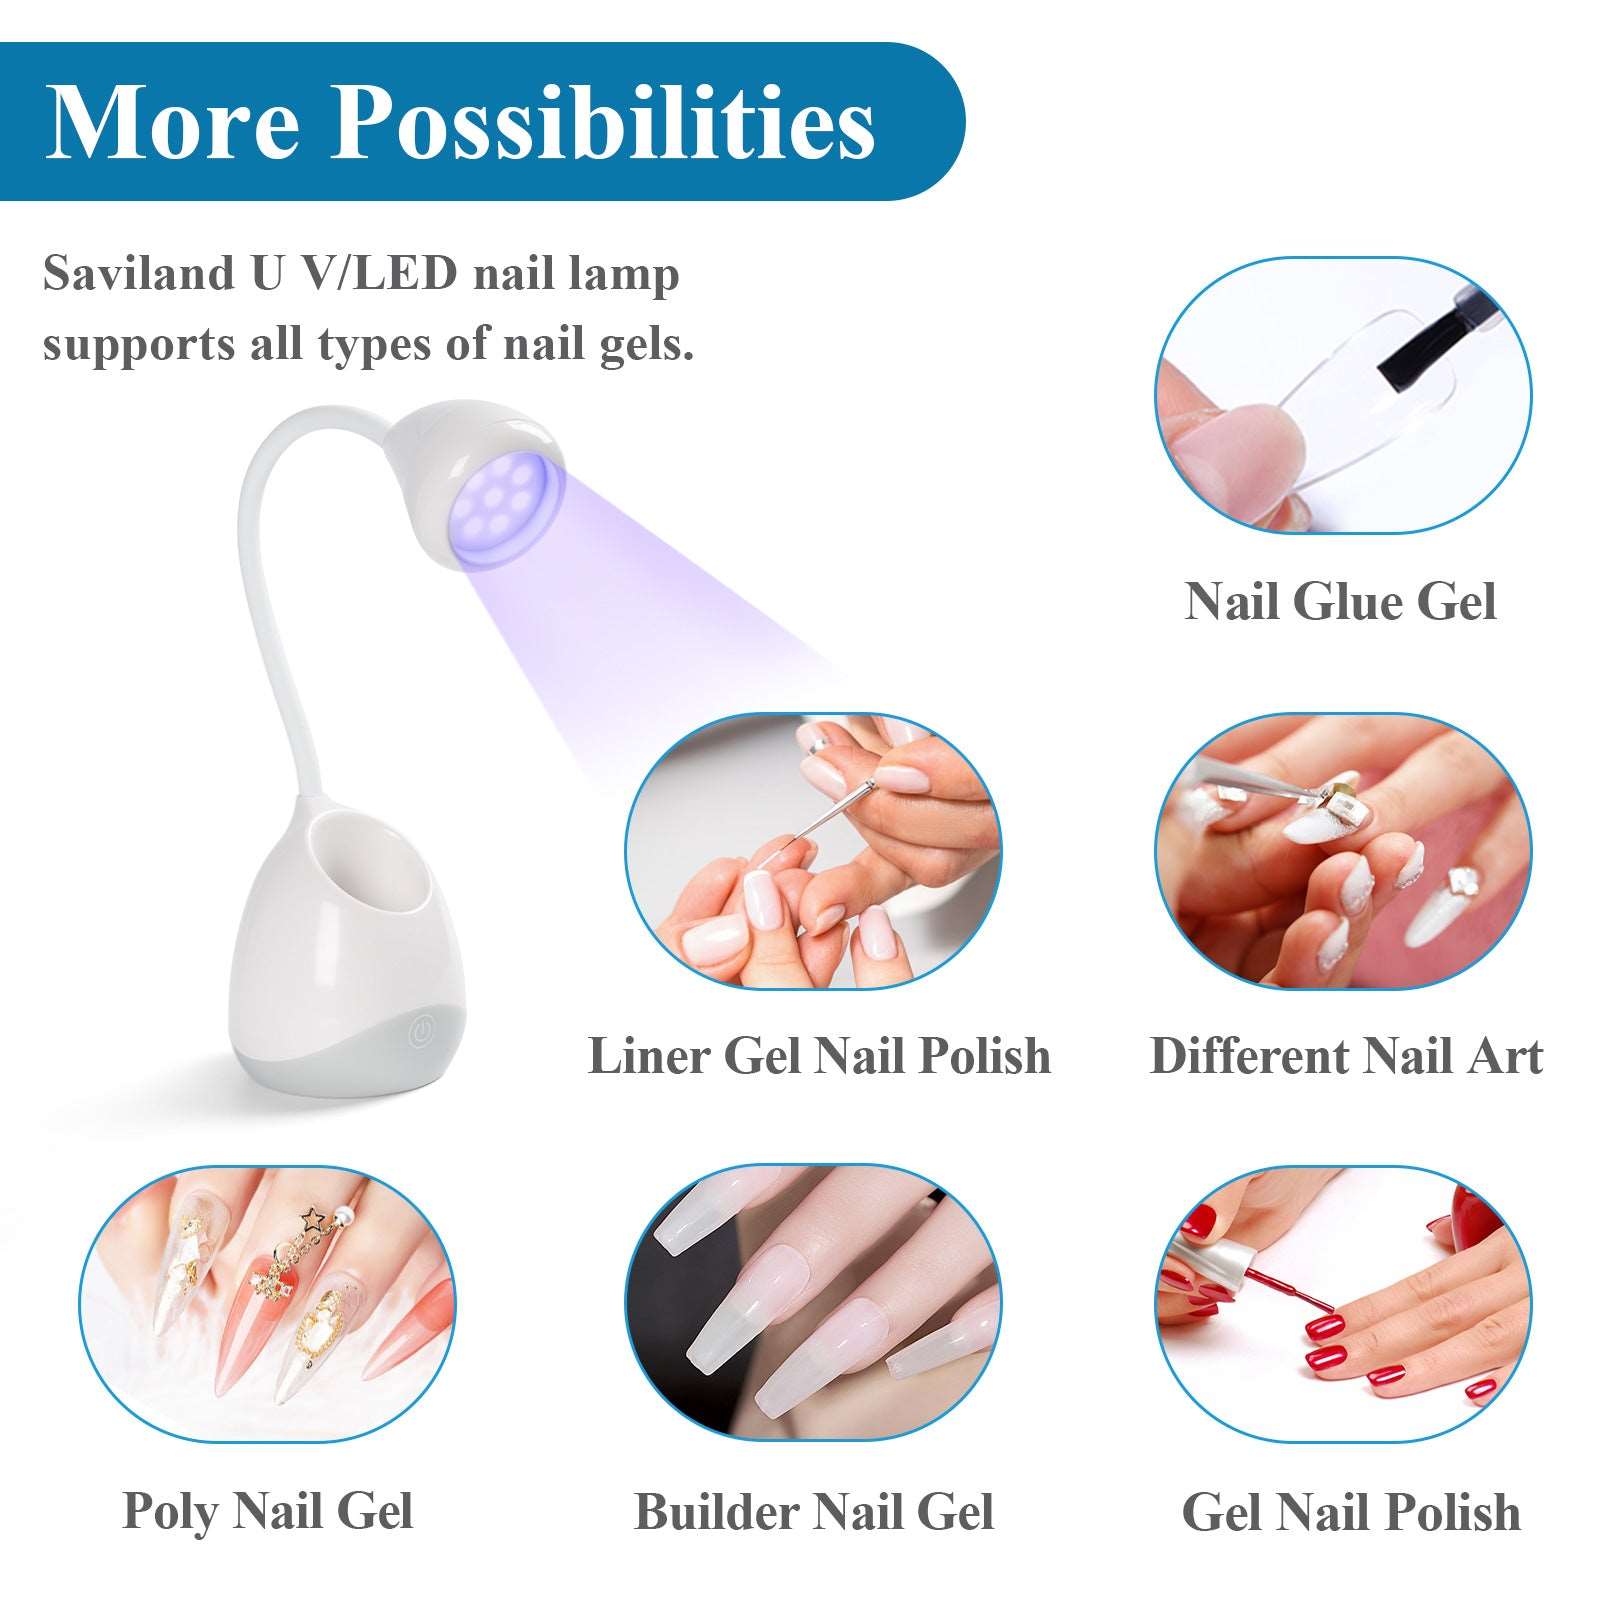 36W Gooseneck LED UV Nail Lamp, UV Light for Gel Nails Hands Free, Mini  Portable Nail Dryer, Gel UV Light Gel Nail Curing Lamp, Nail Art  Accessories